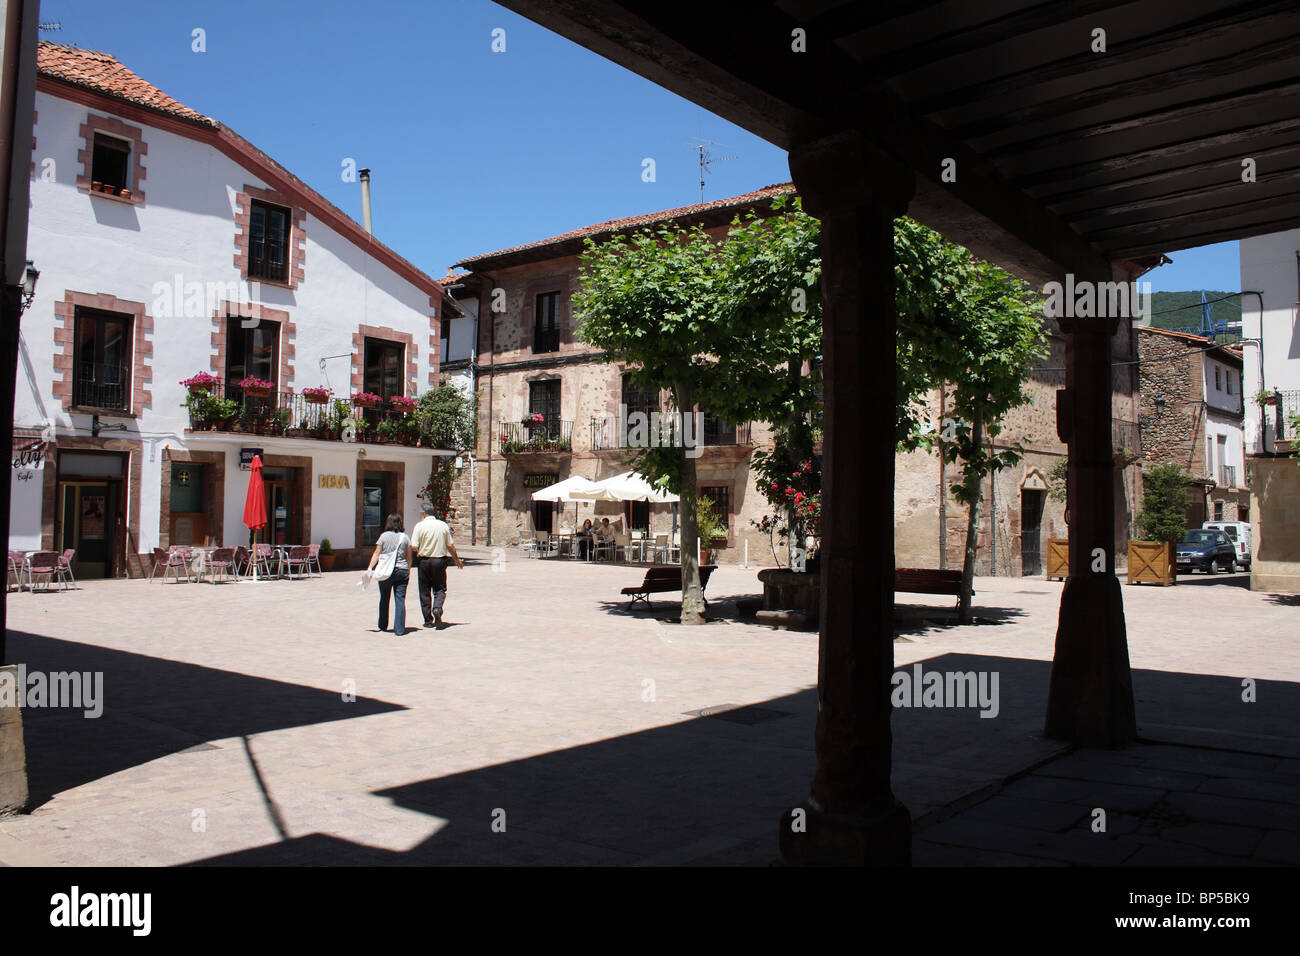 View from beneath veranda to Plaza de la Verdura, Ezcaray, La Rioja, Spain Stock Photo